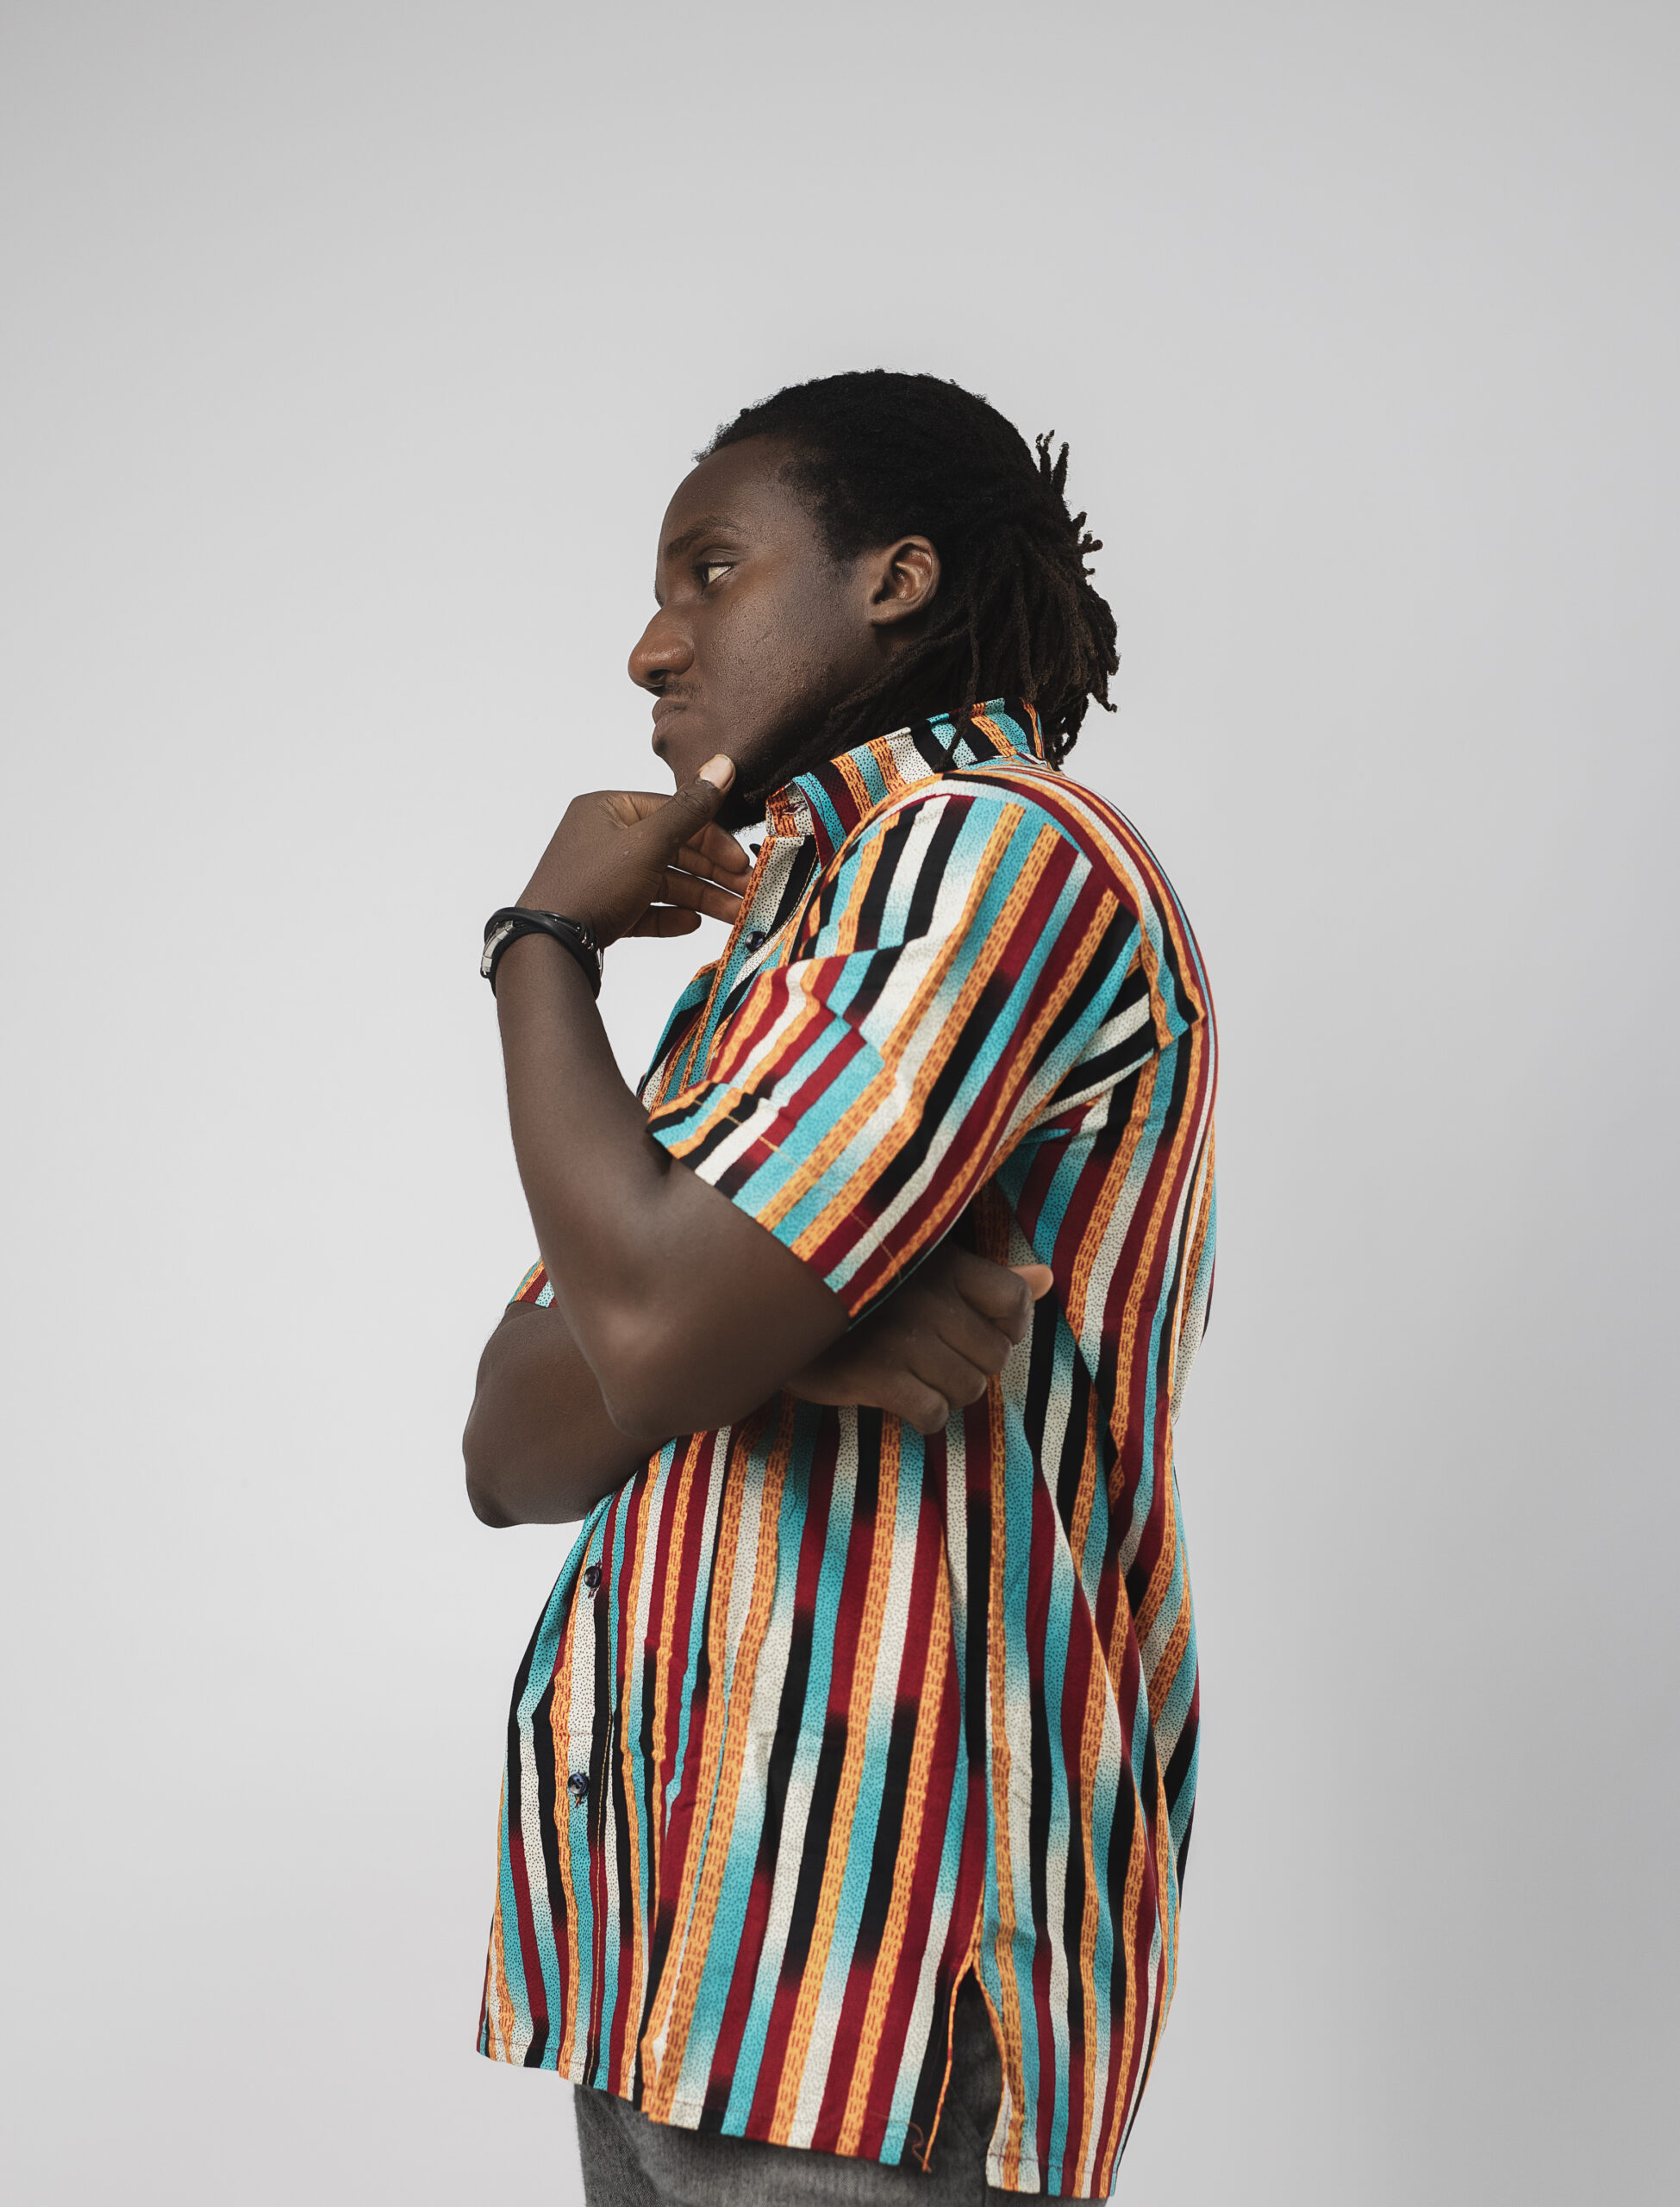 Rainbow Striped African Best Customisable Stylish Shirt